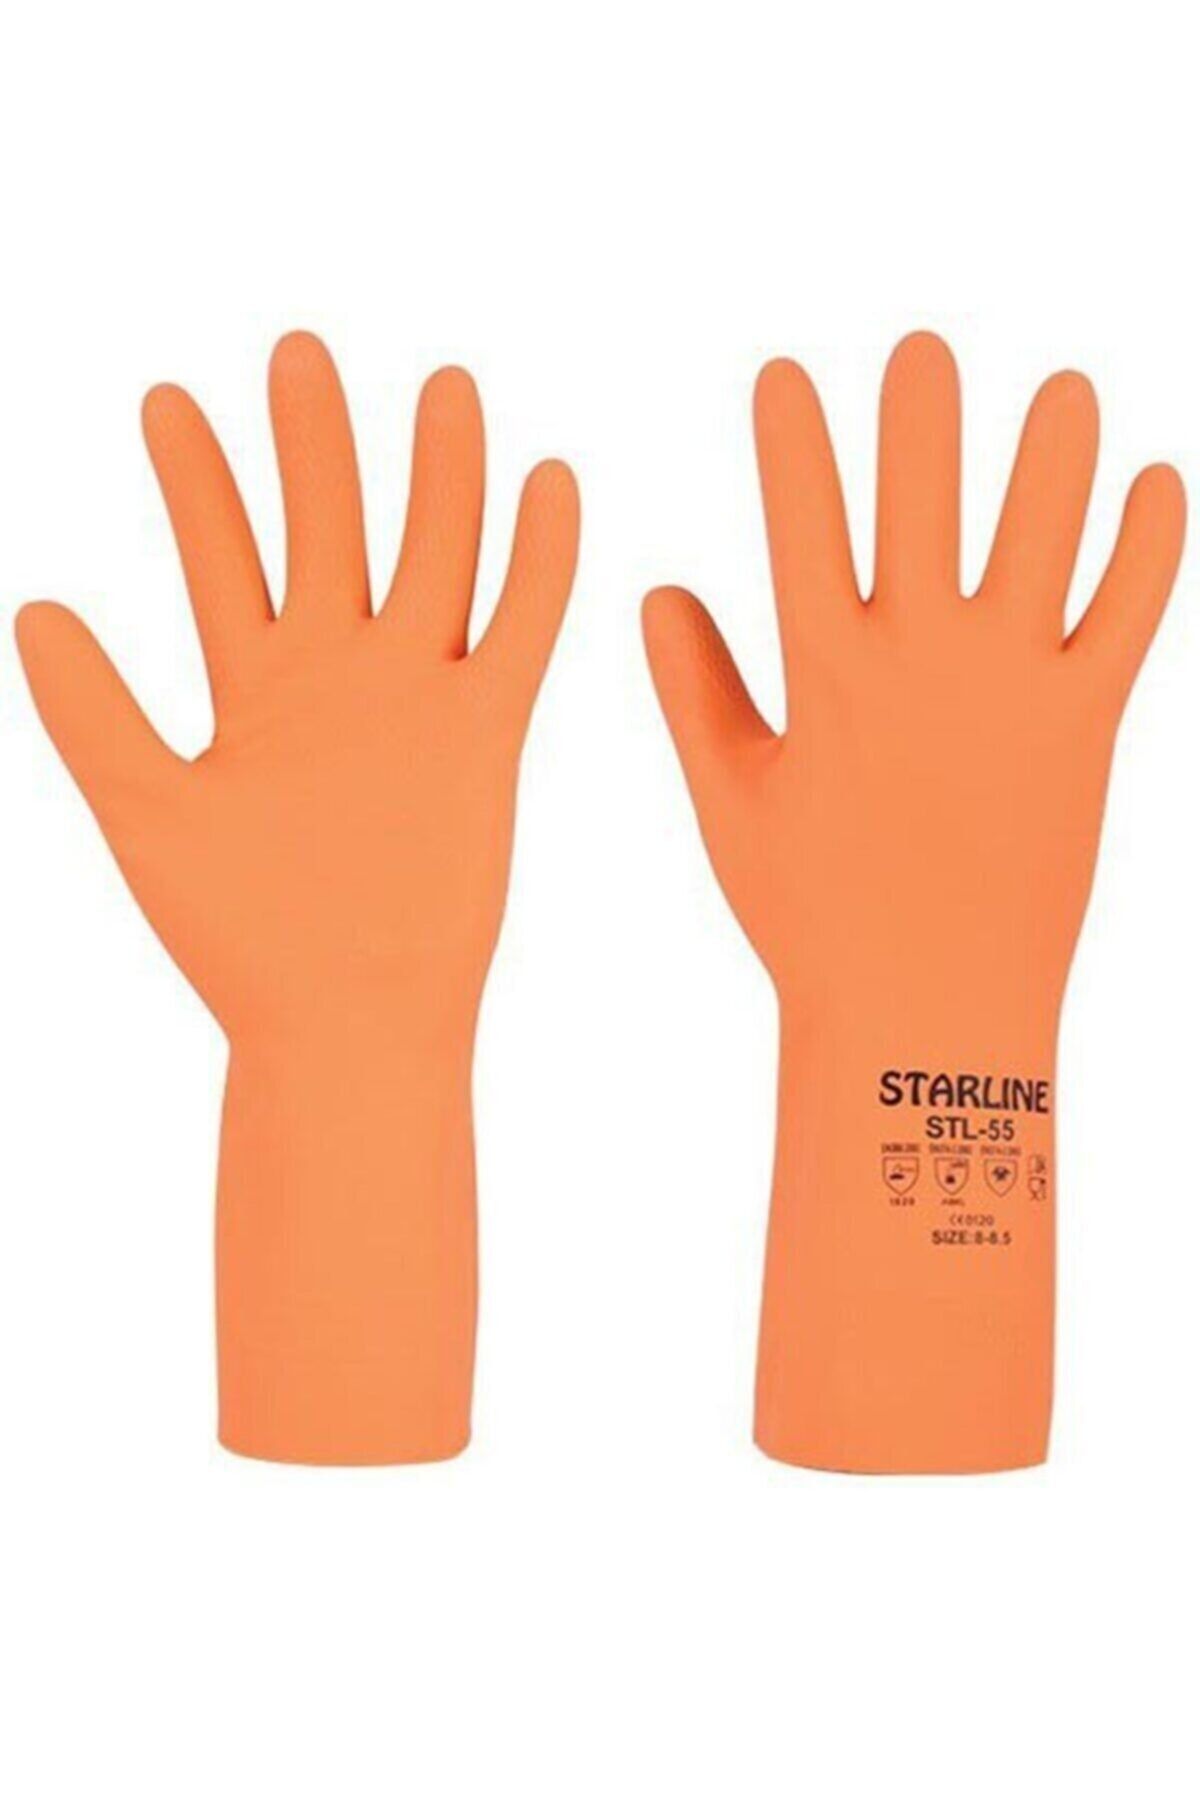 Starline Stl-55 Doğal Kauçuk Kimyasal Eldiven 7-7,5 ( 3 Çift)